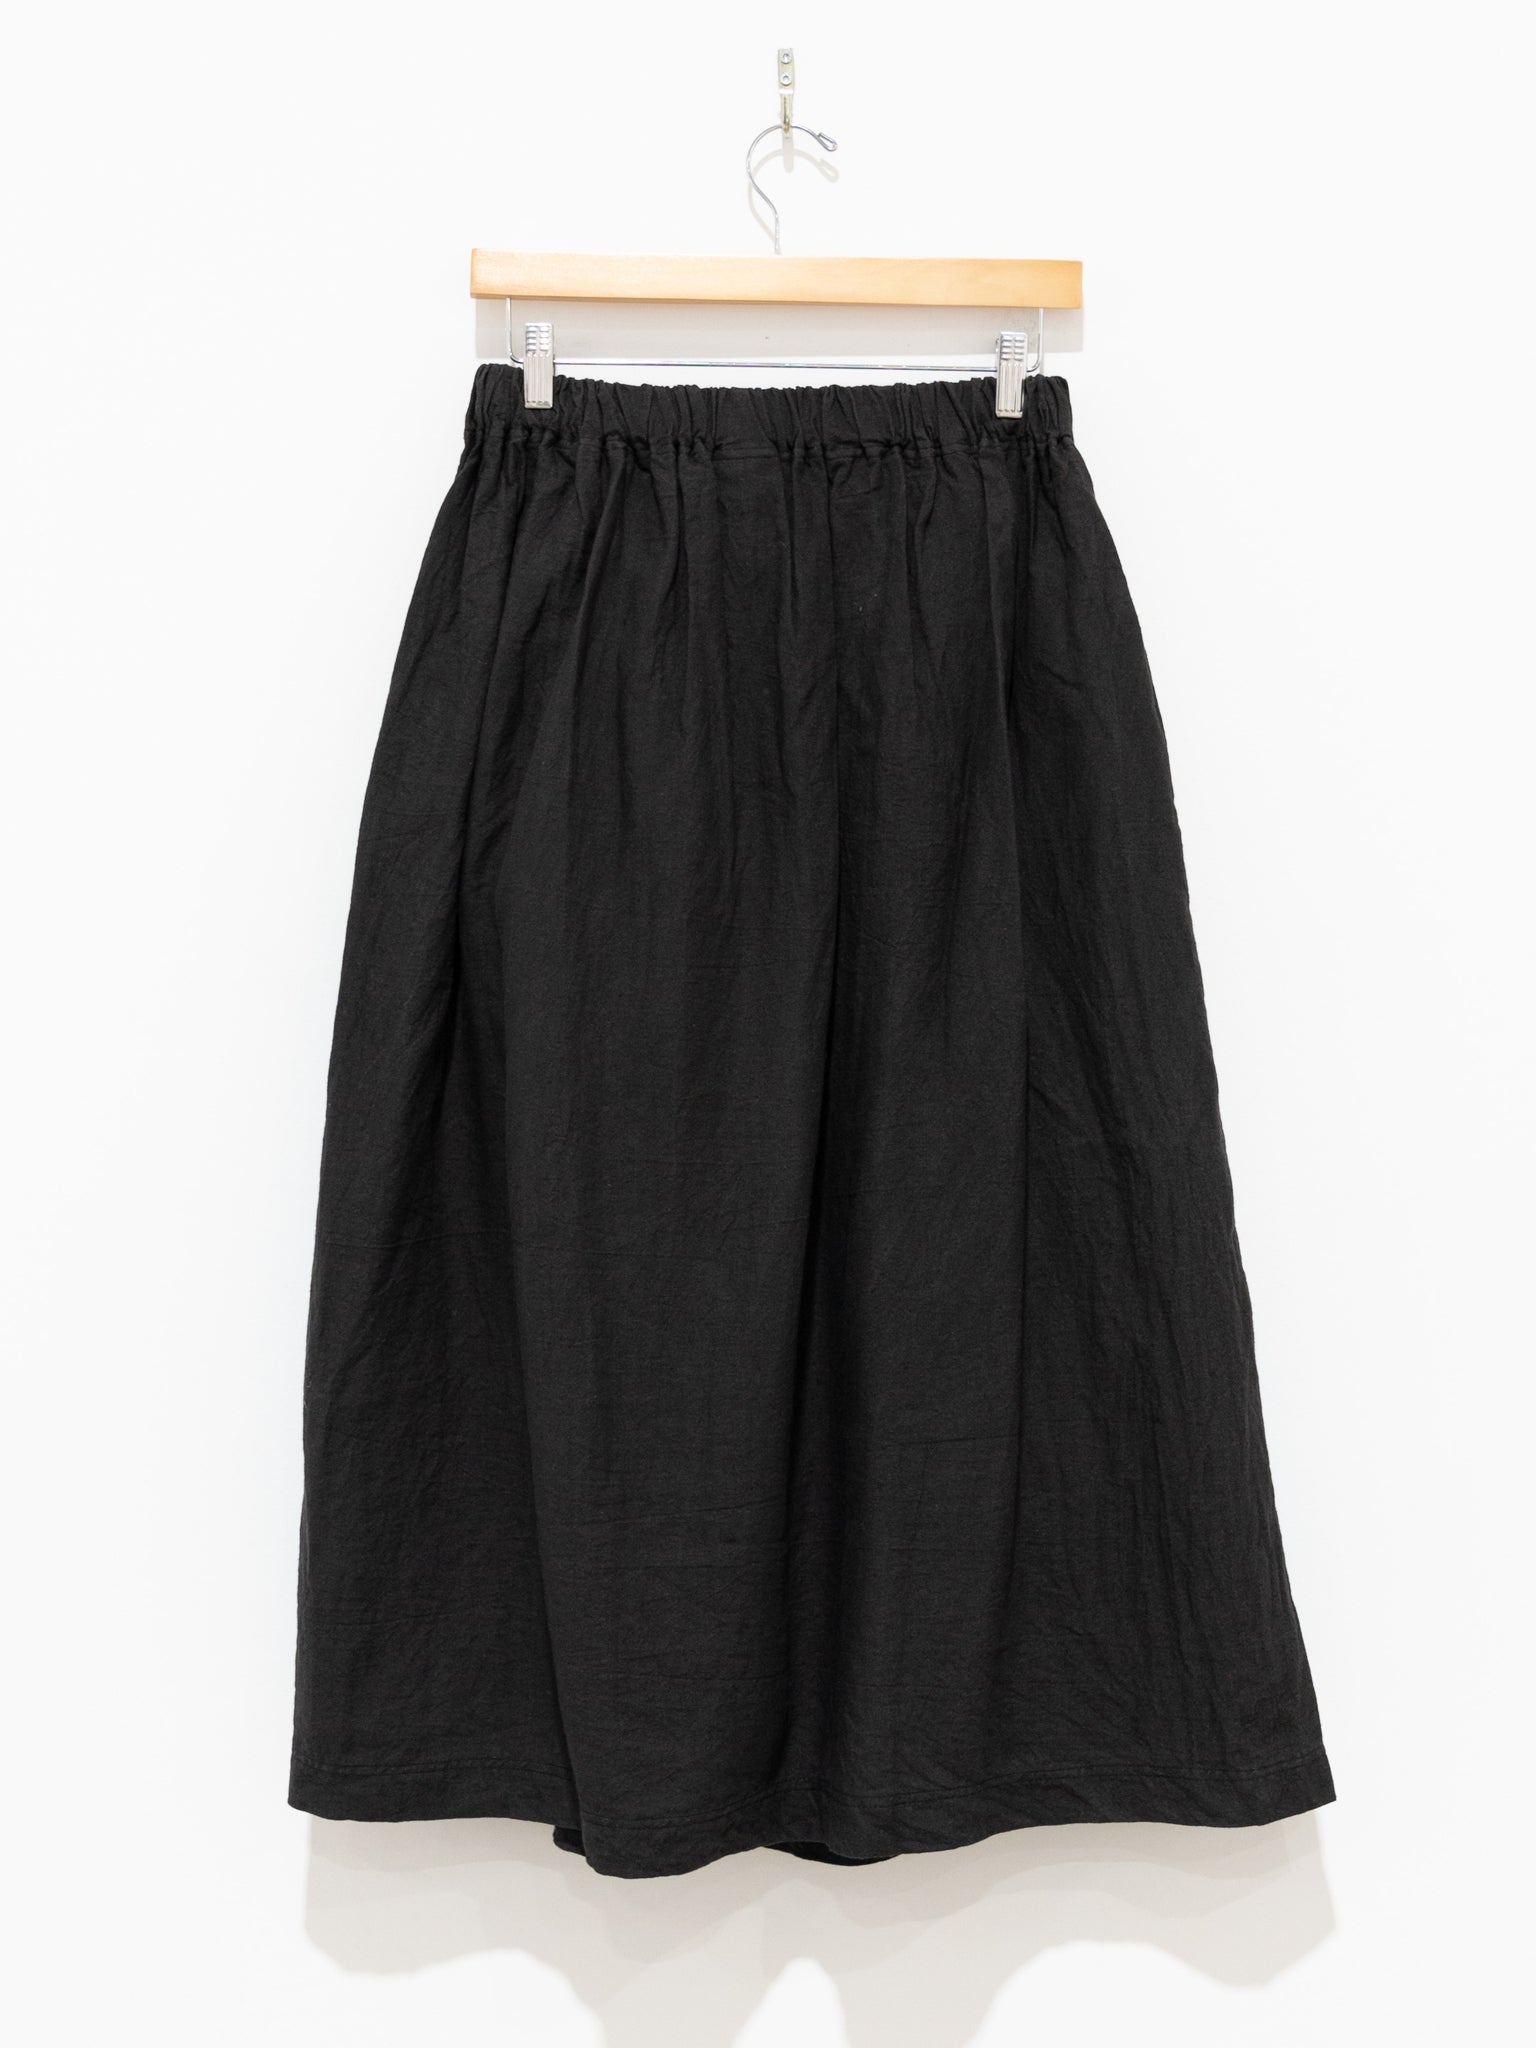 Namu Shop - Ichi Antiquites Azumadaki Ramie Linen Skirt - Black